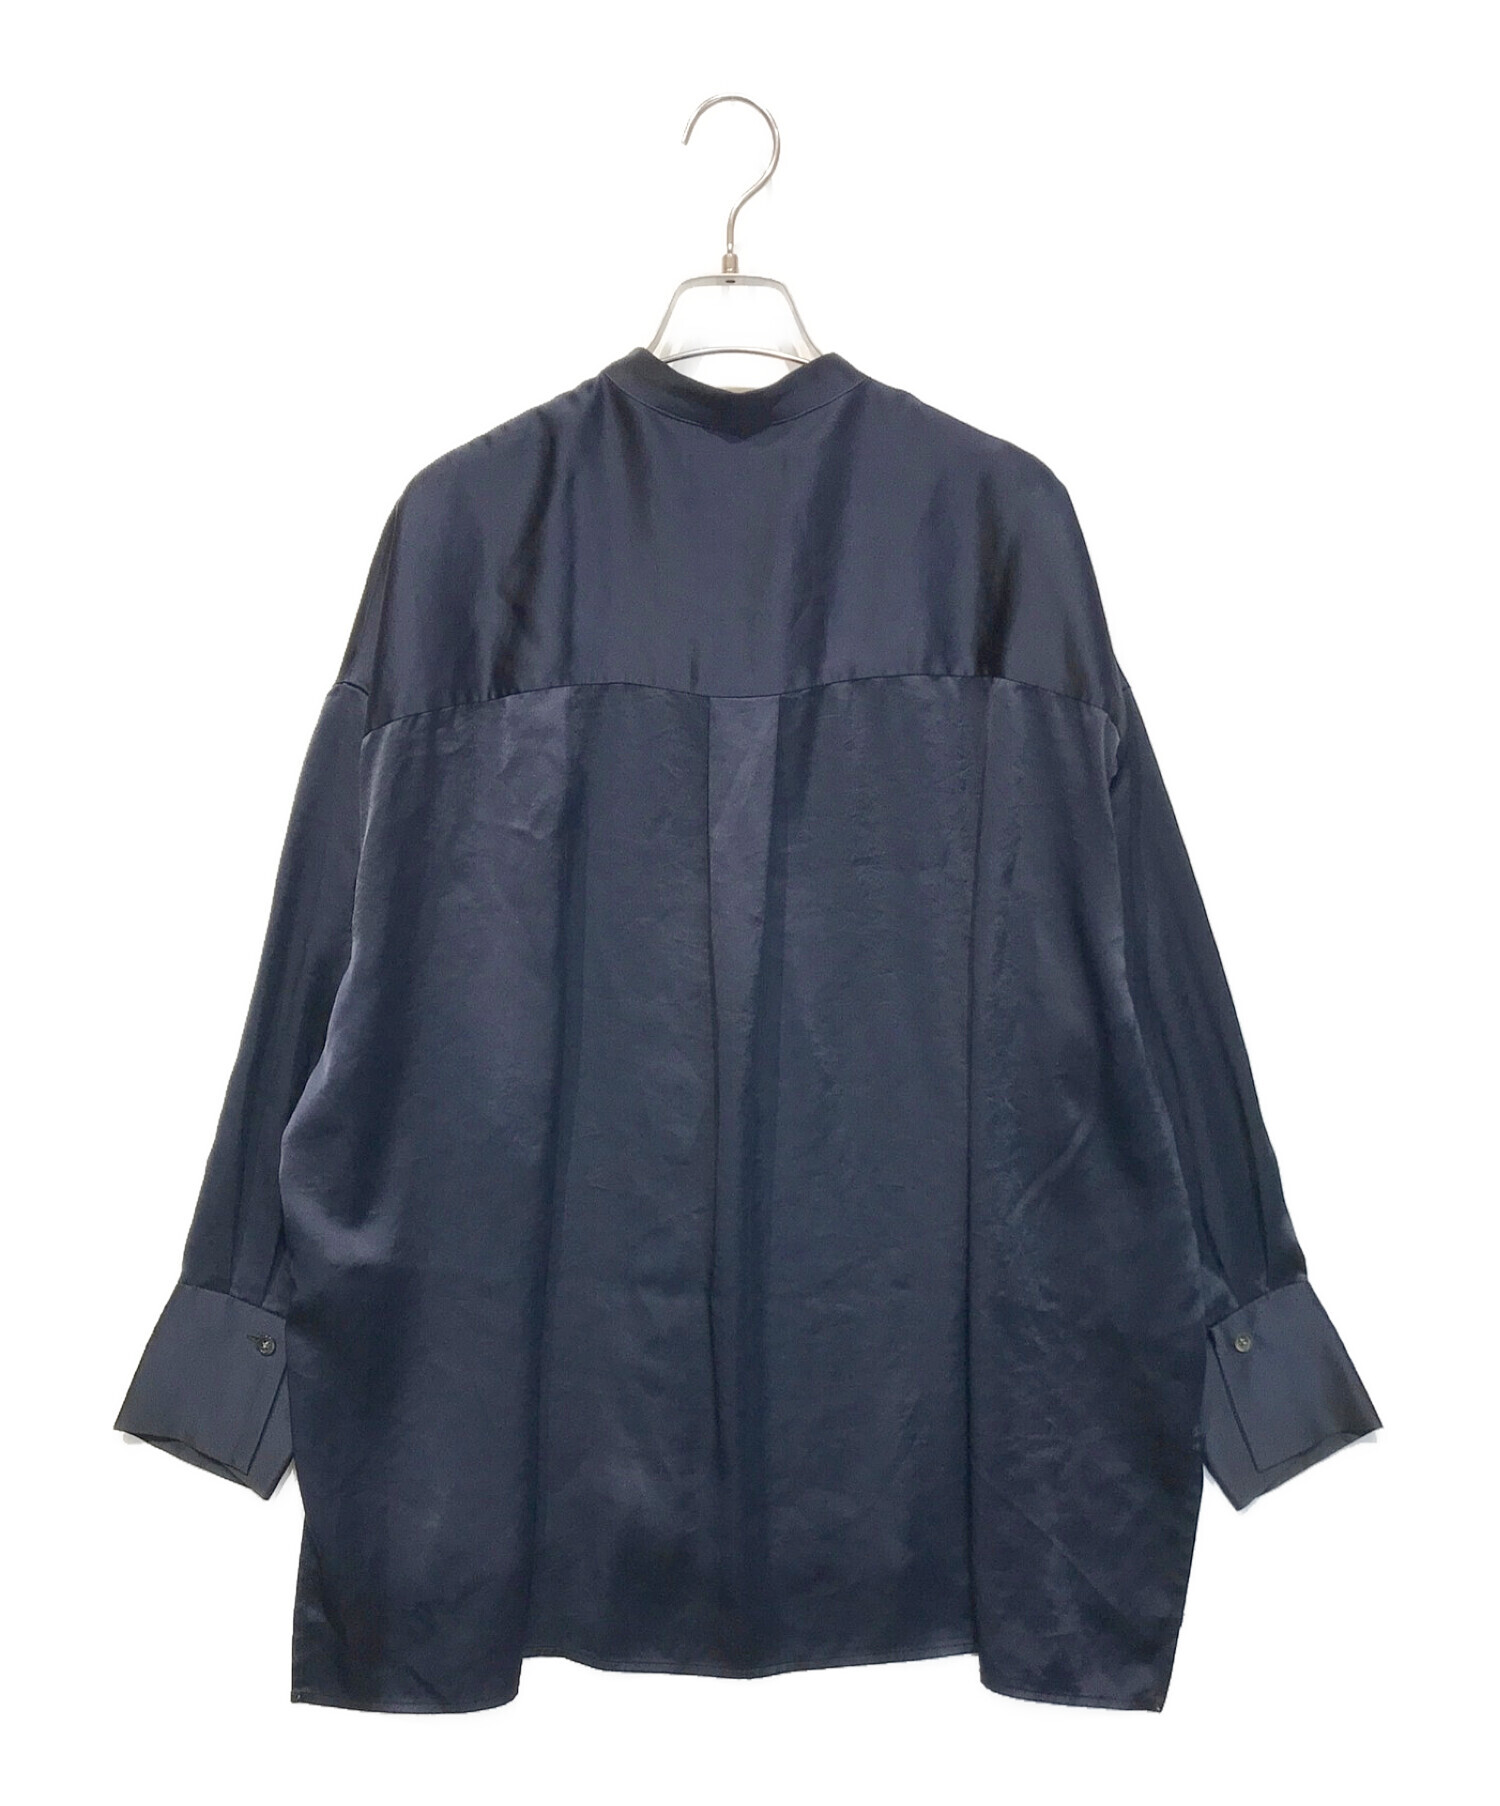 SACRA (サクラ) トリアセテートサテン バンドカラーシャツ ネイビー サイズ:38